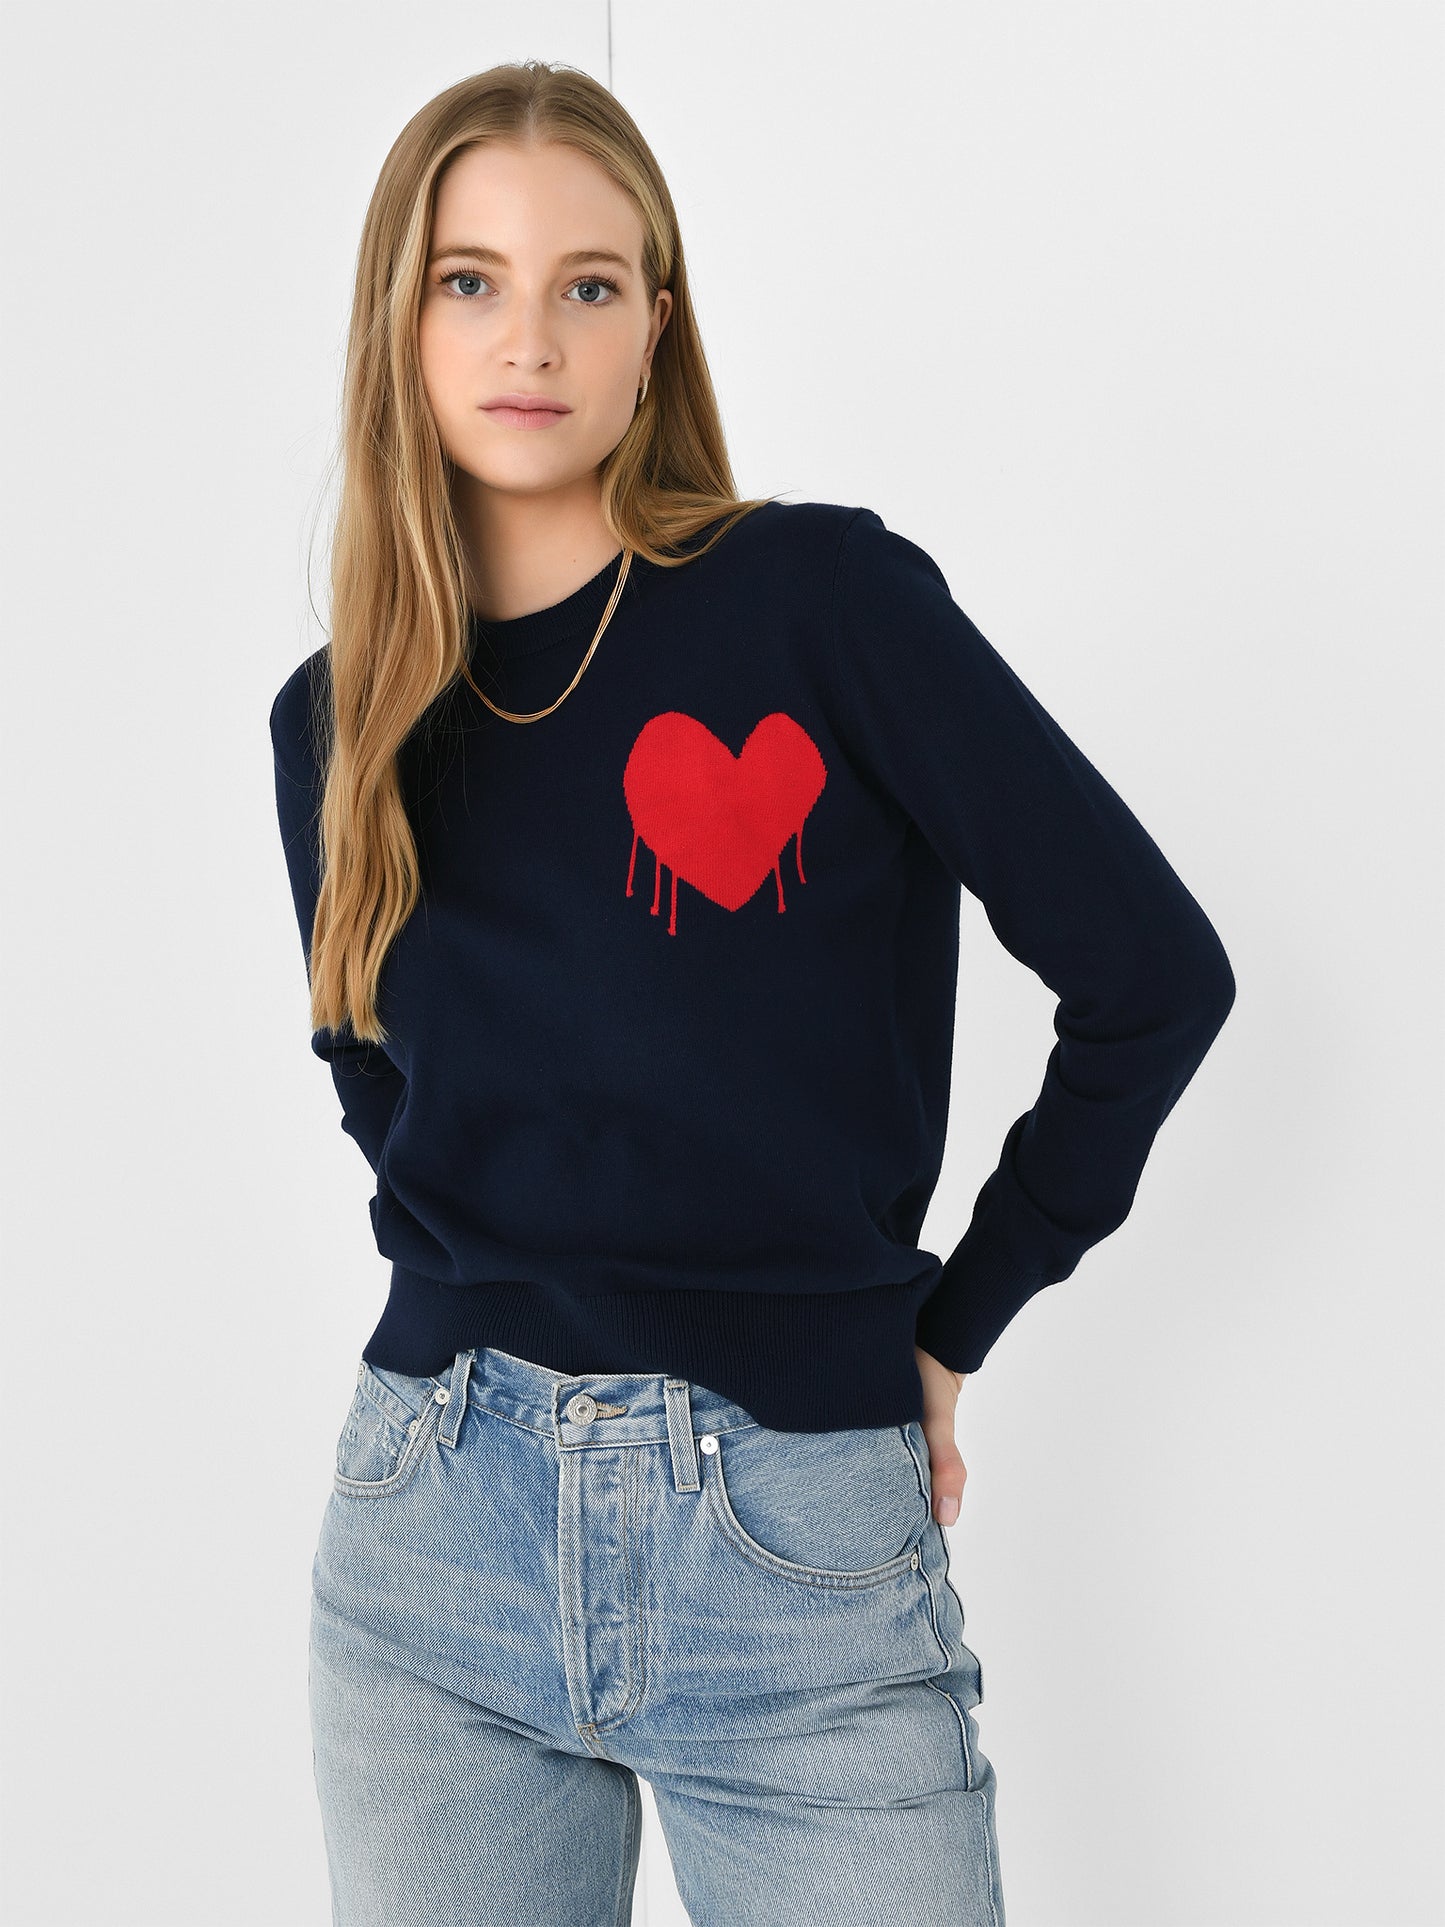 Kerri Rosenthal Women's Charli Drippy Heart Sweater